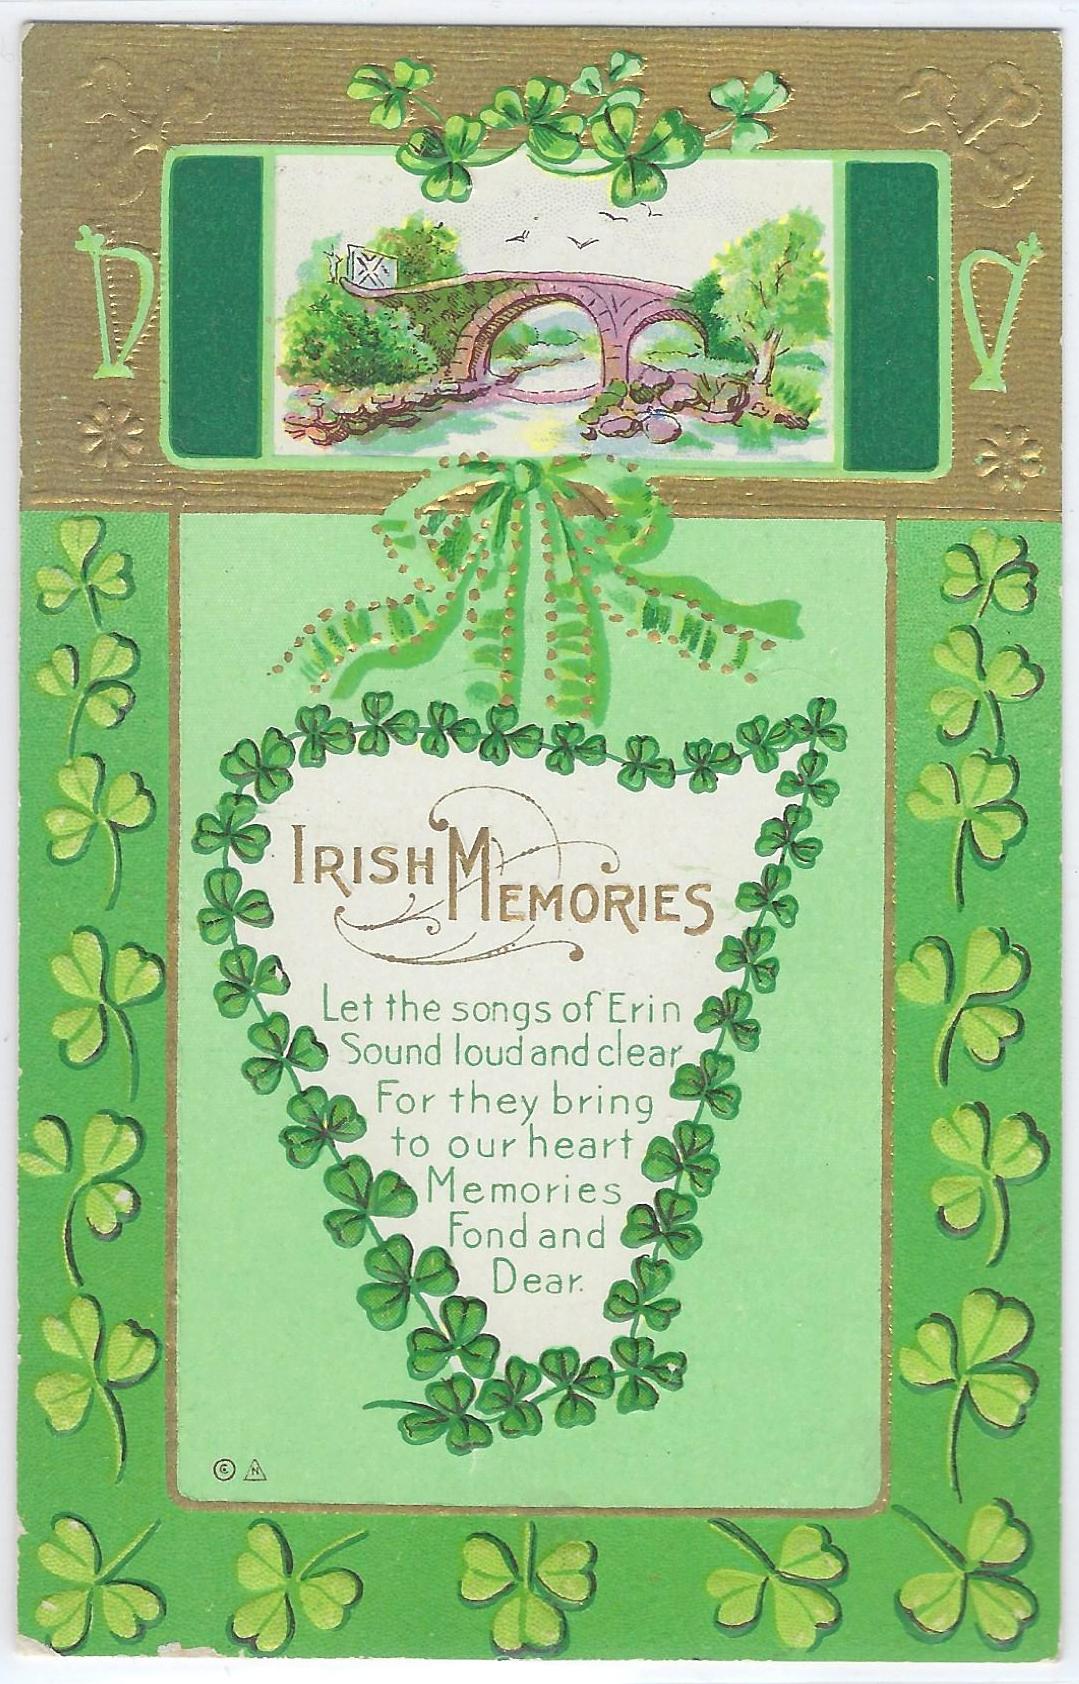 Saint Patrick's Day Postcard Embossed Irish Memories Poem Gold Top Shamrock Border